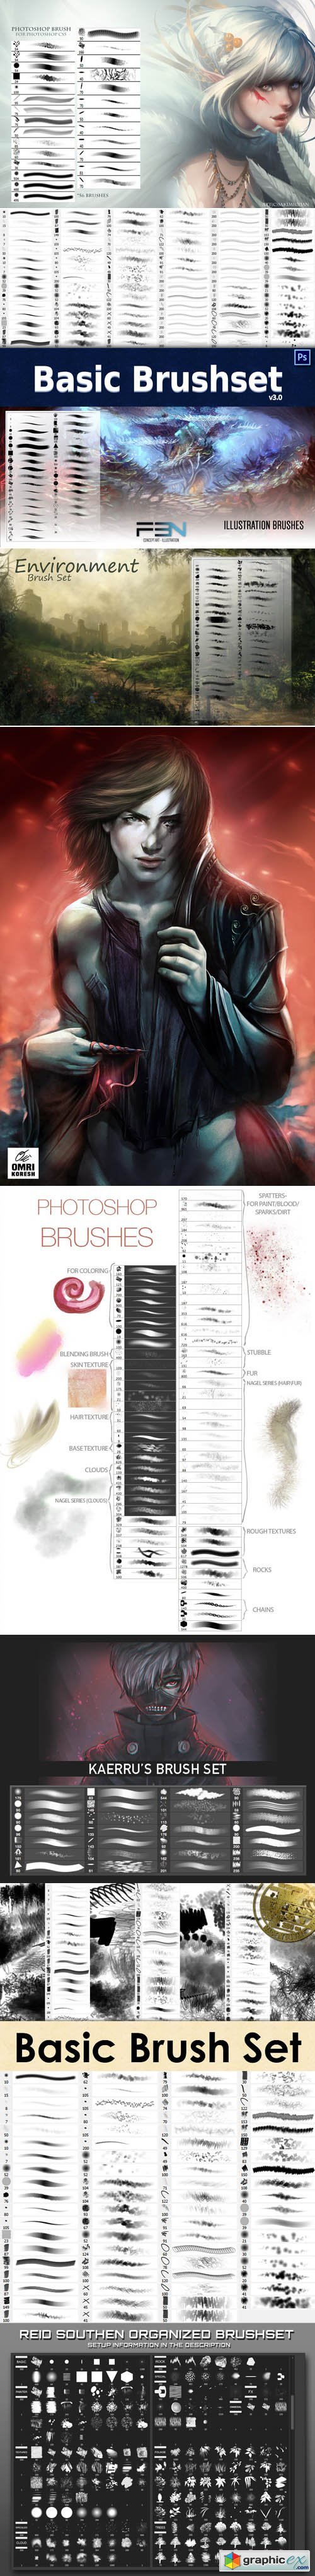 Illustration & Environment Brushes for Photoshop